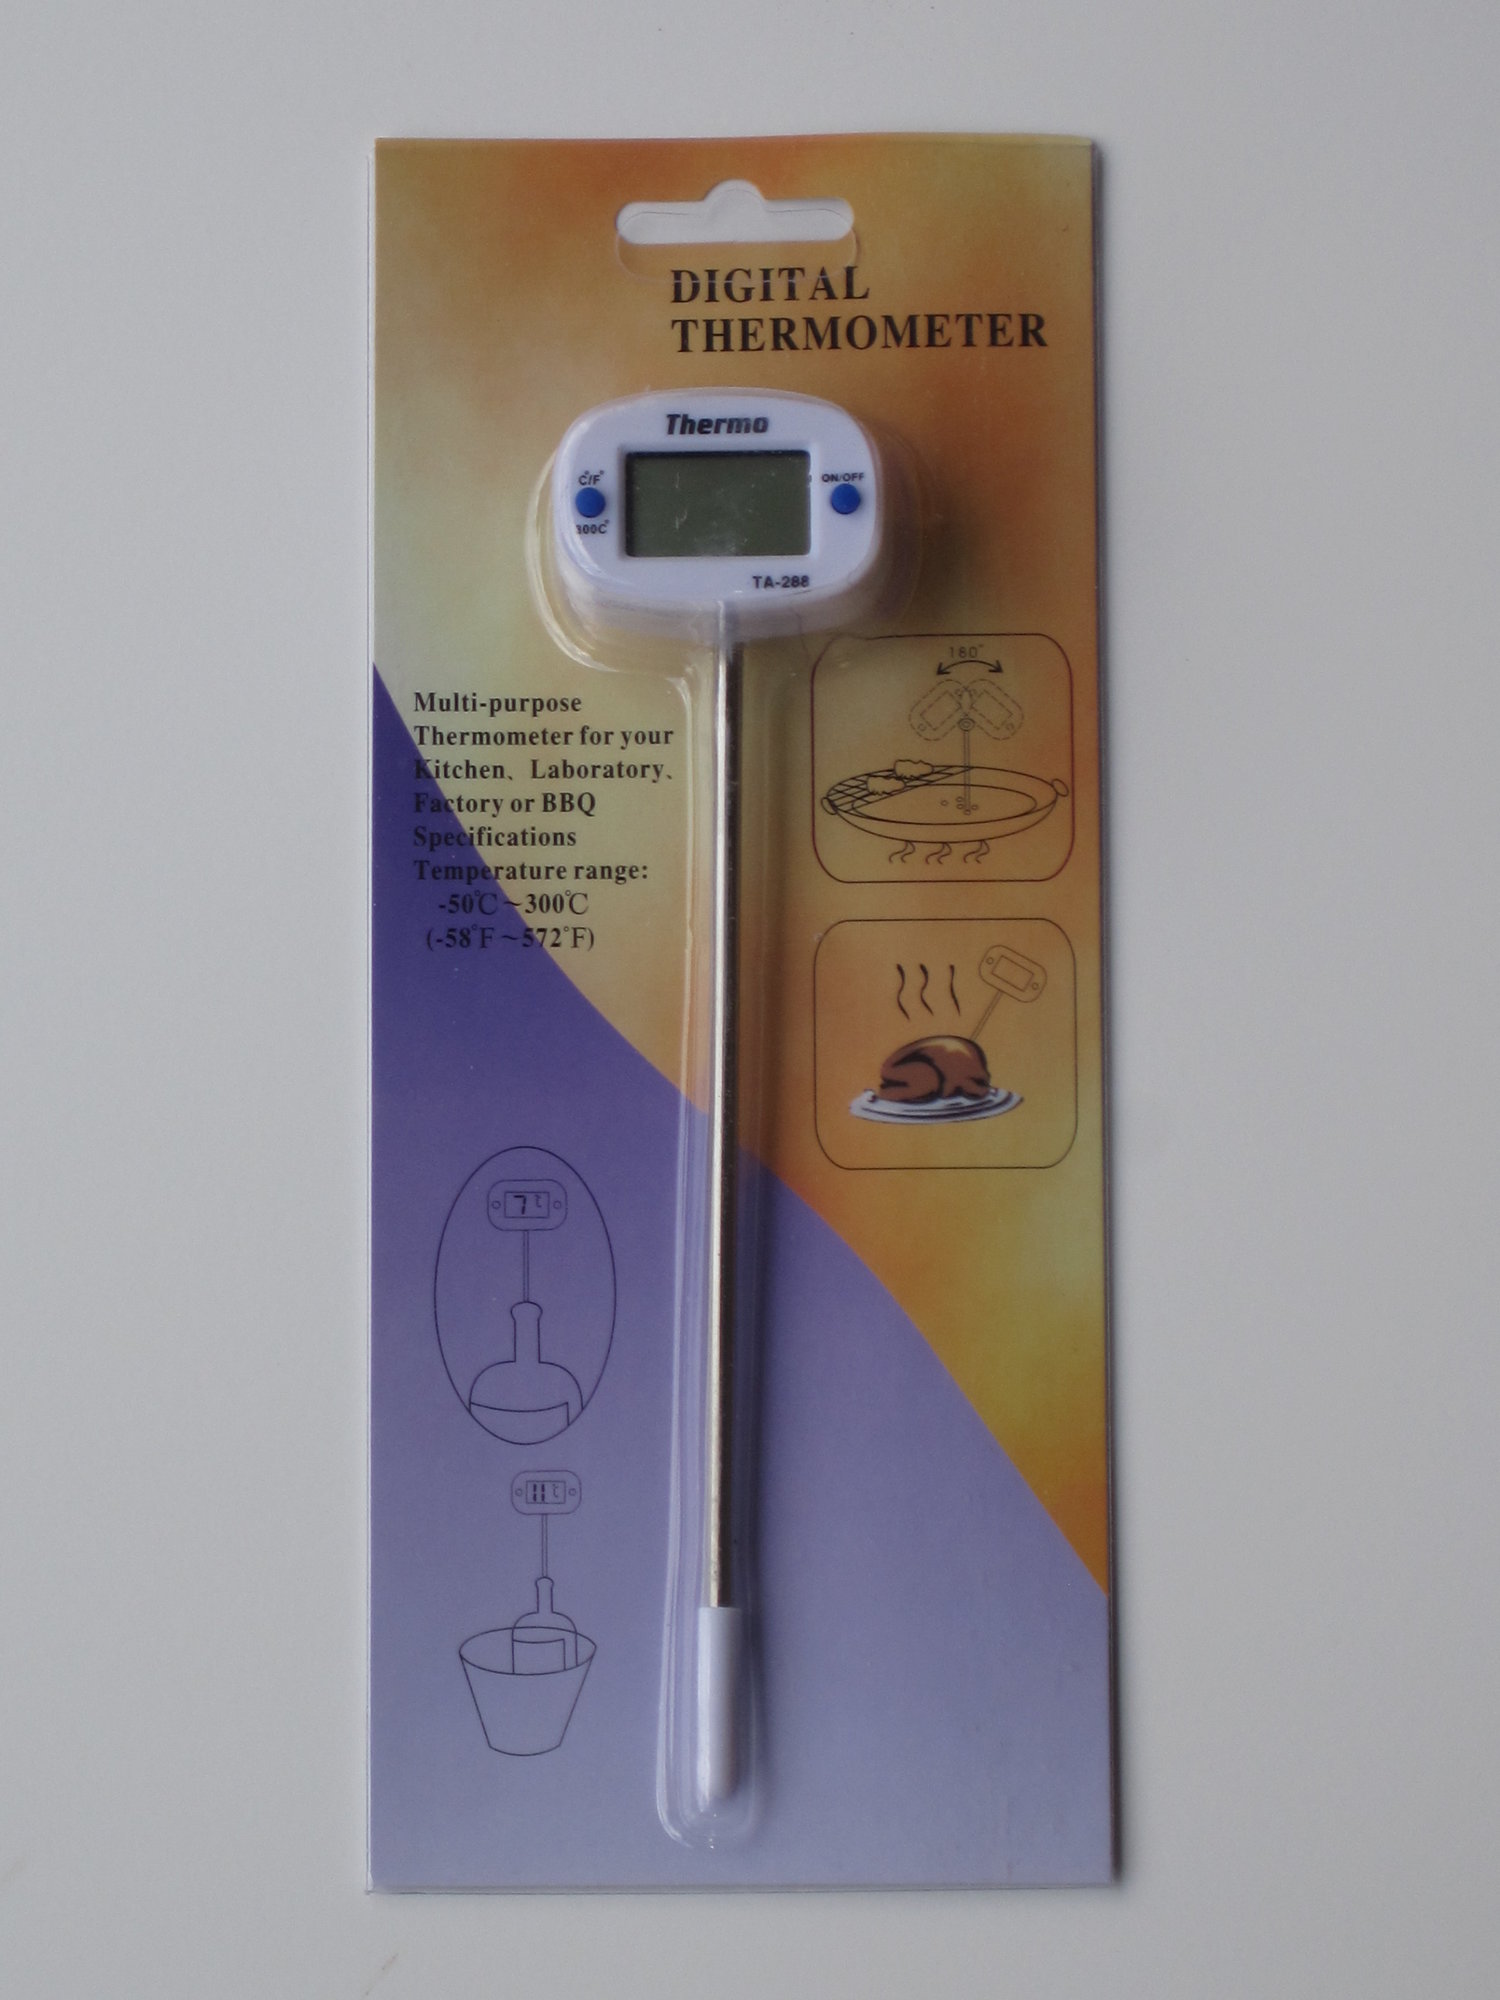 Digital Thermometer — Moonshine Stills and Micro Distillery Equipment